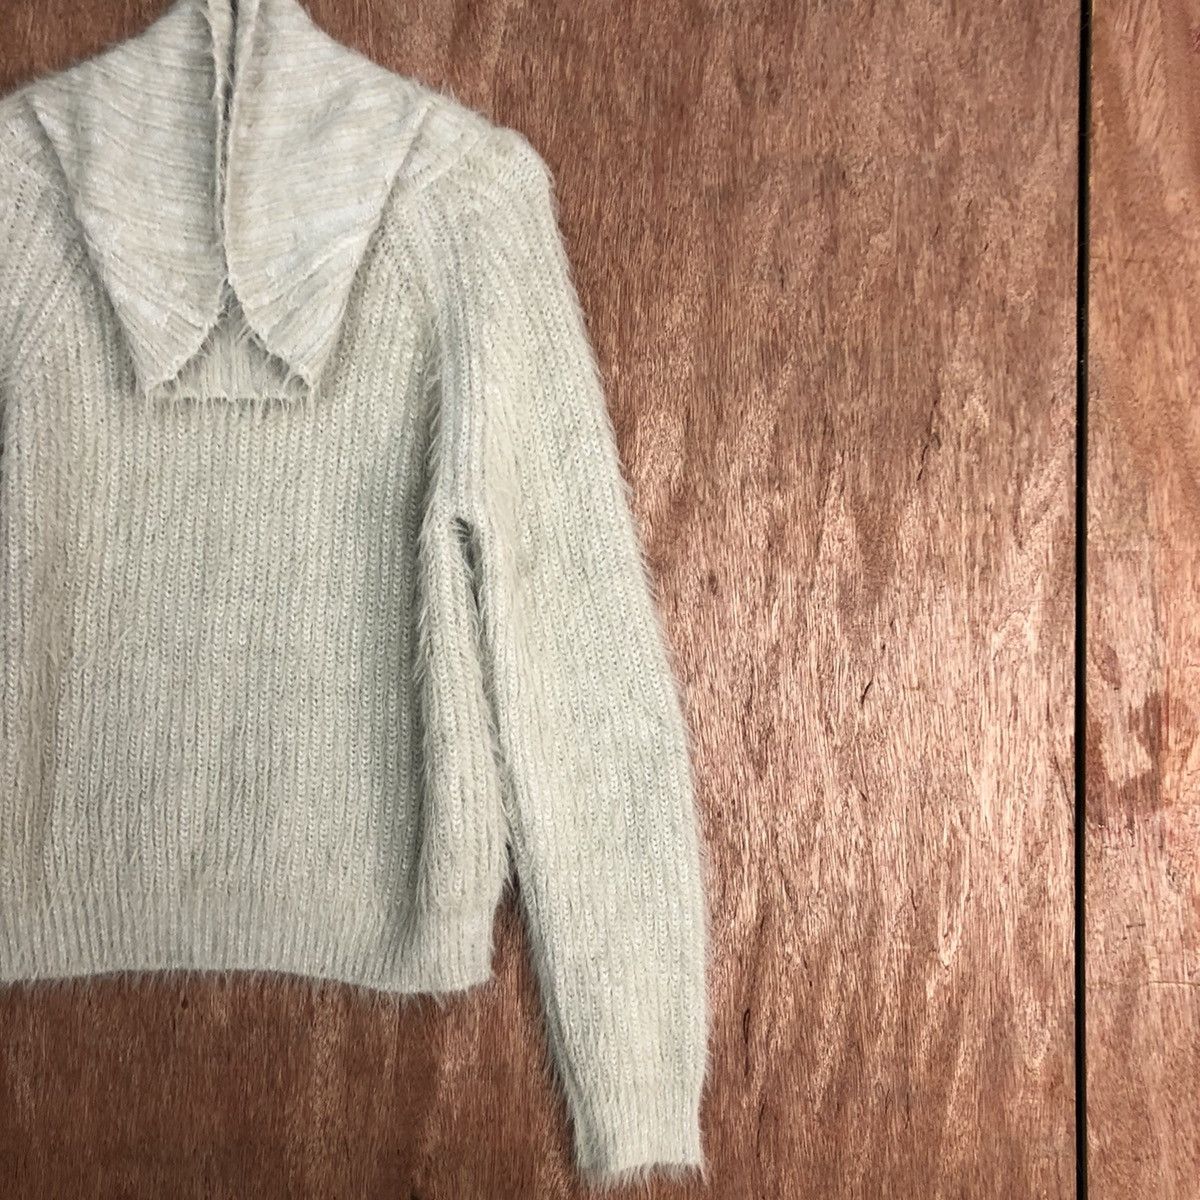 Homespun Knitwear Turtle Neck Mohair Knit Sweater Size US S / EU 44-46 / 1 - 5 Thumbnail